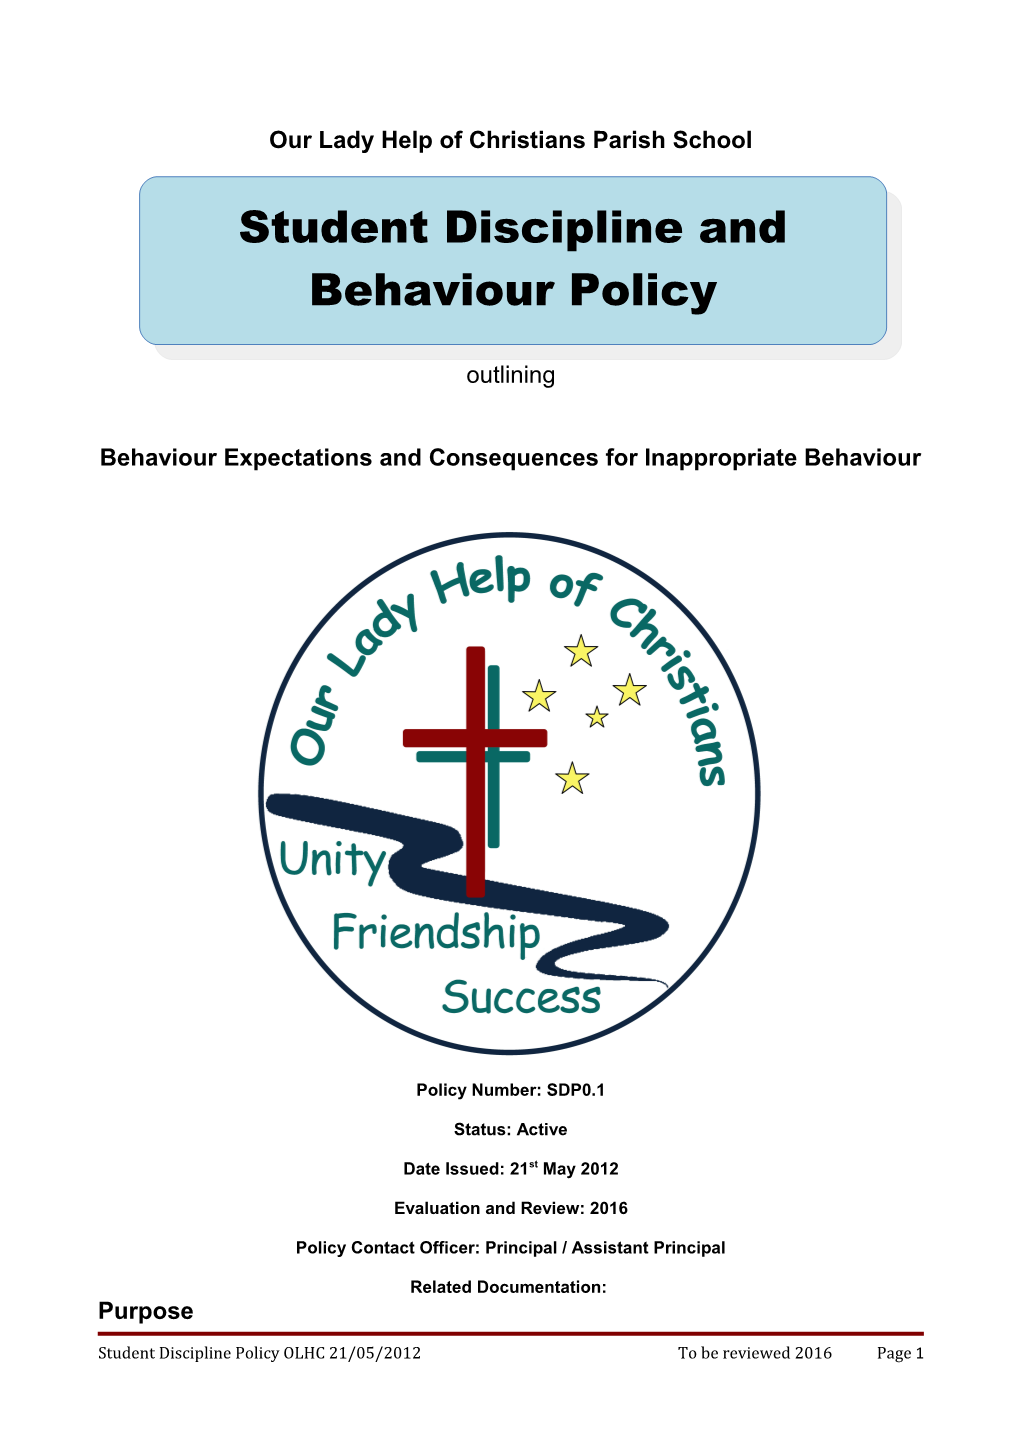 Student Behaviour Policy OLHC 2012